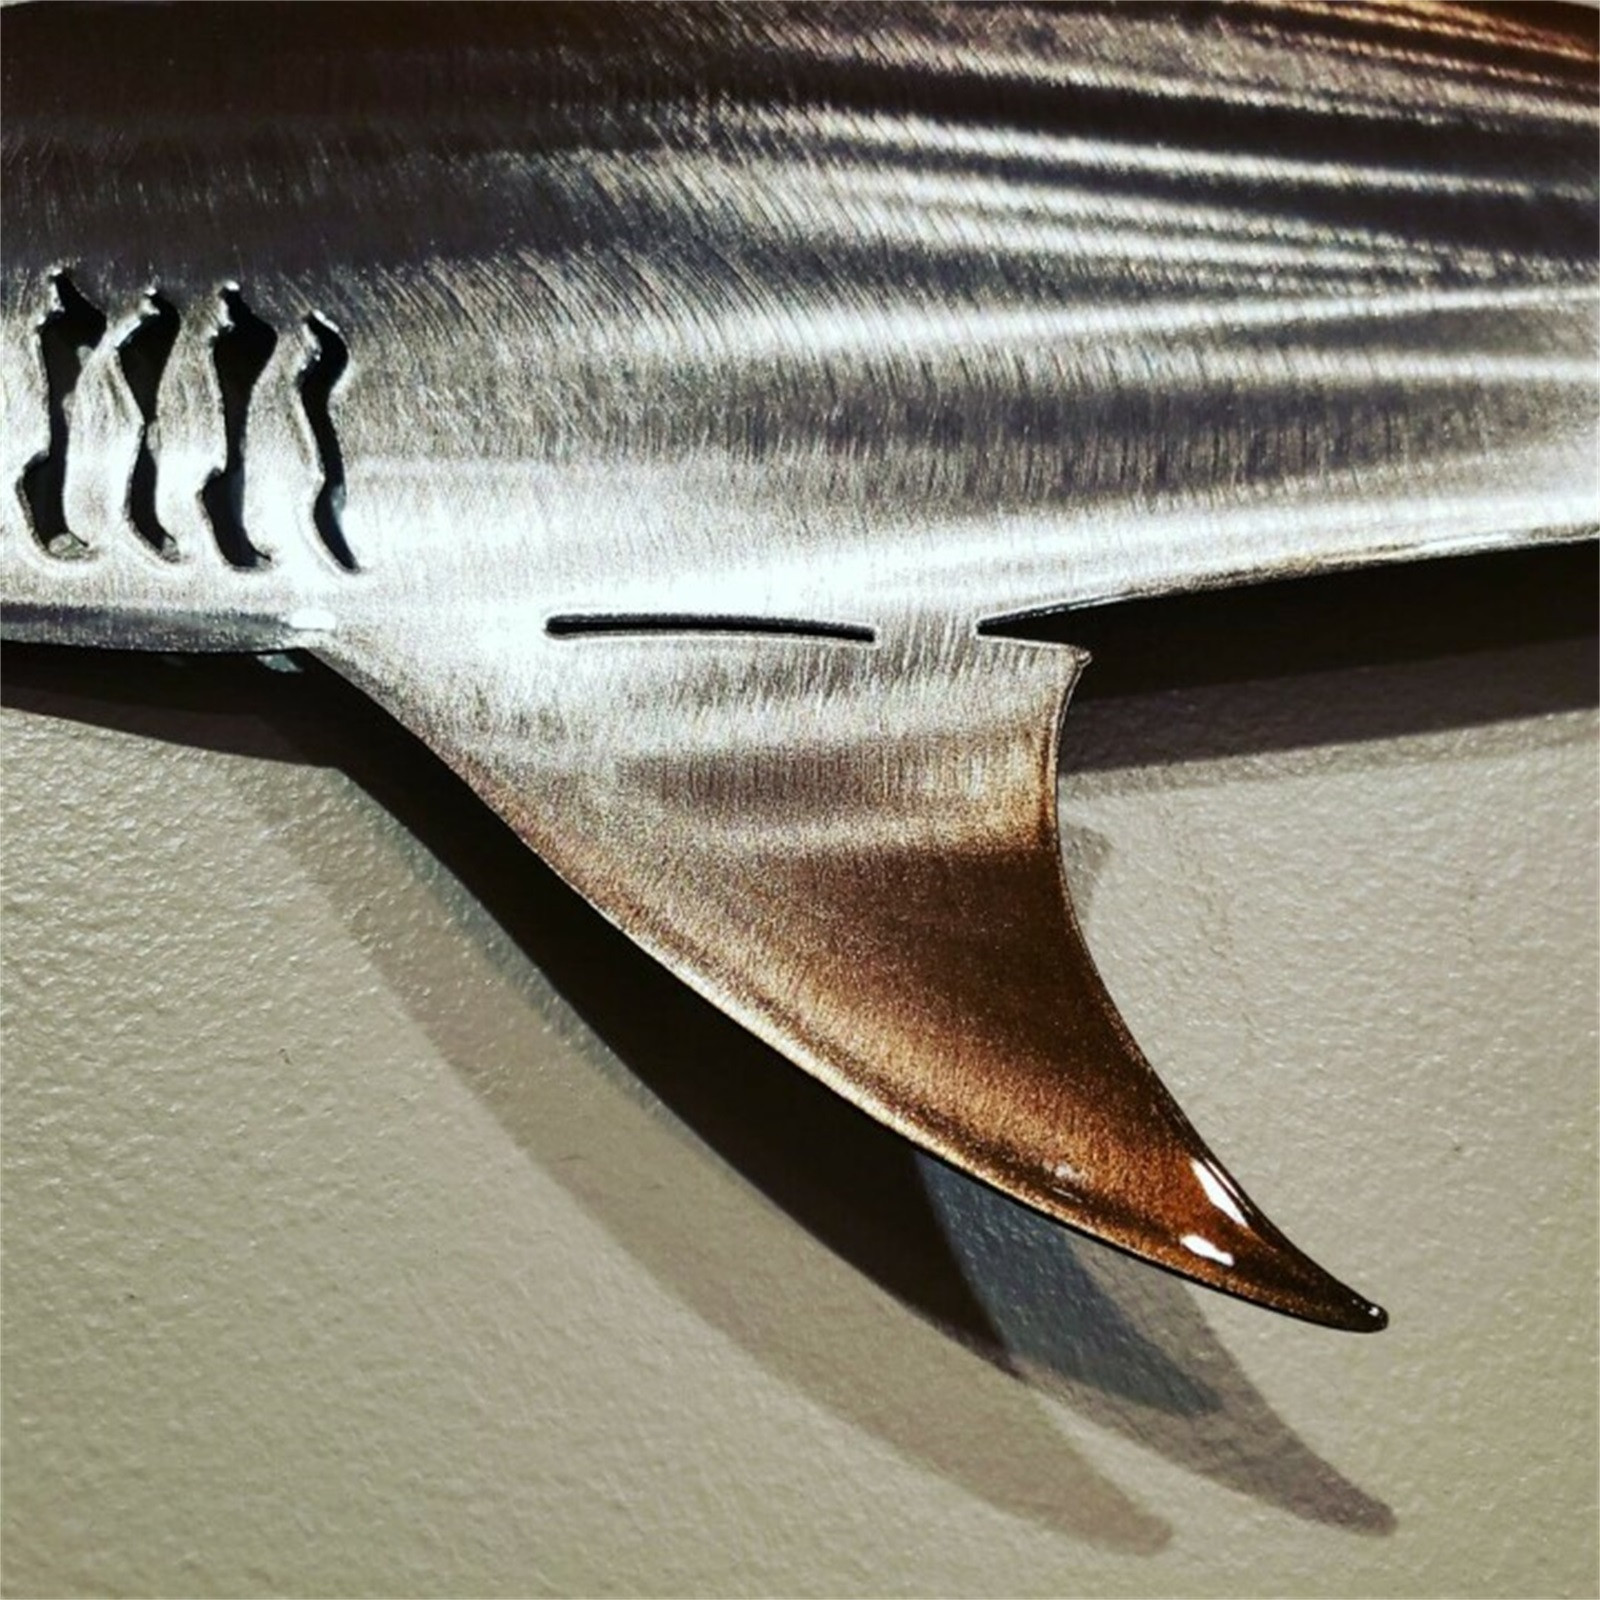 Metal Shark Outdoor Wall Art Hanging Sculpture for Living Room,Bedroom,Home Decor - image 4 of 6